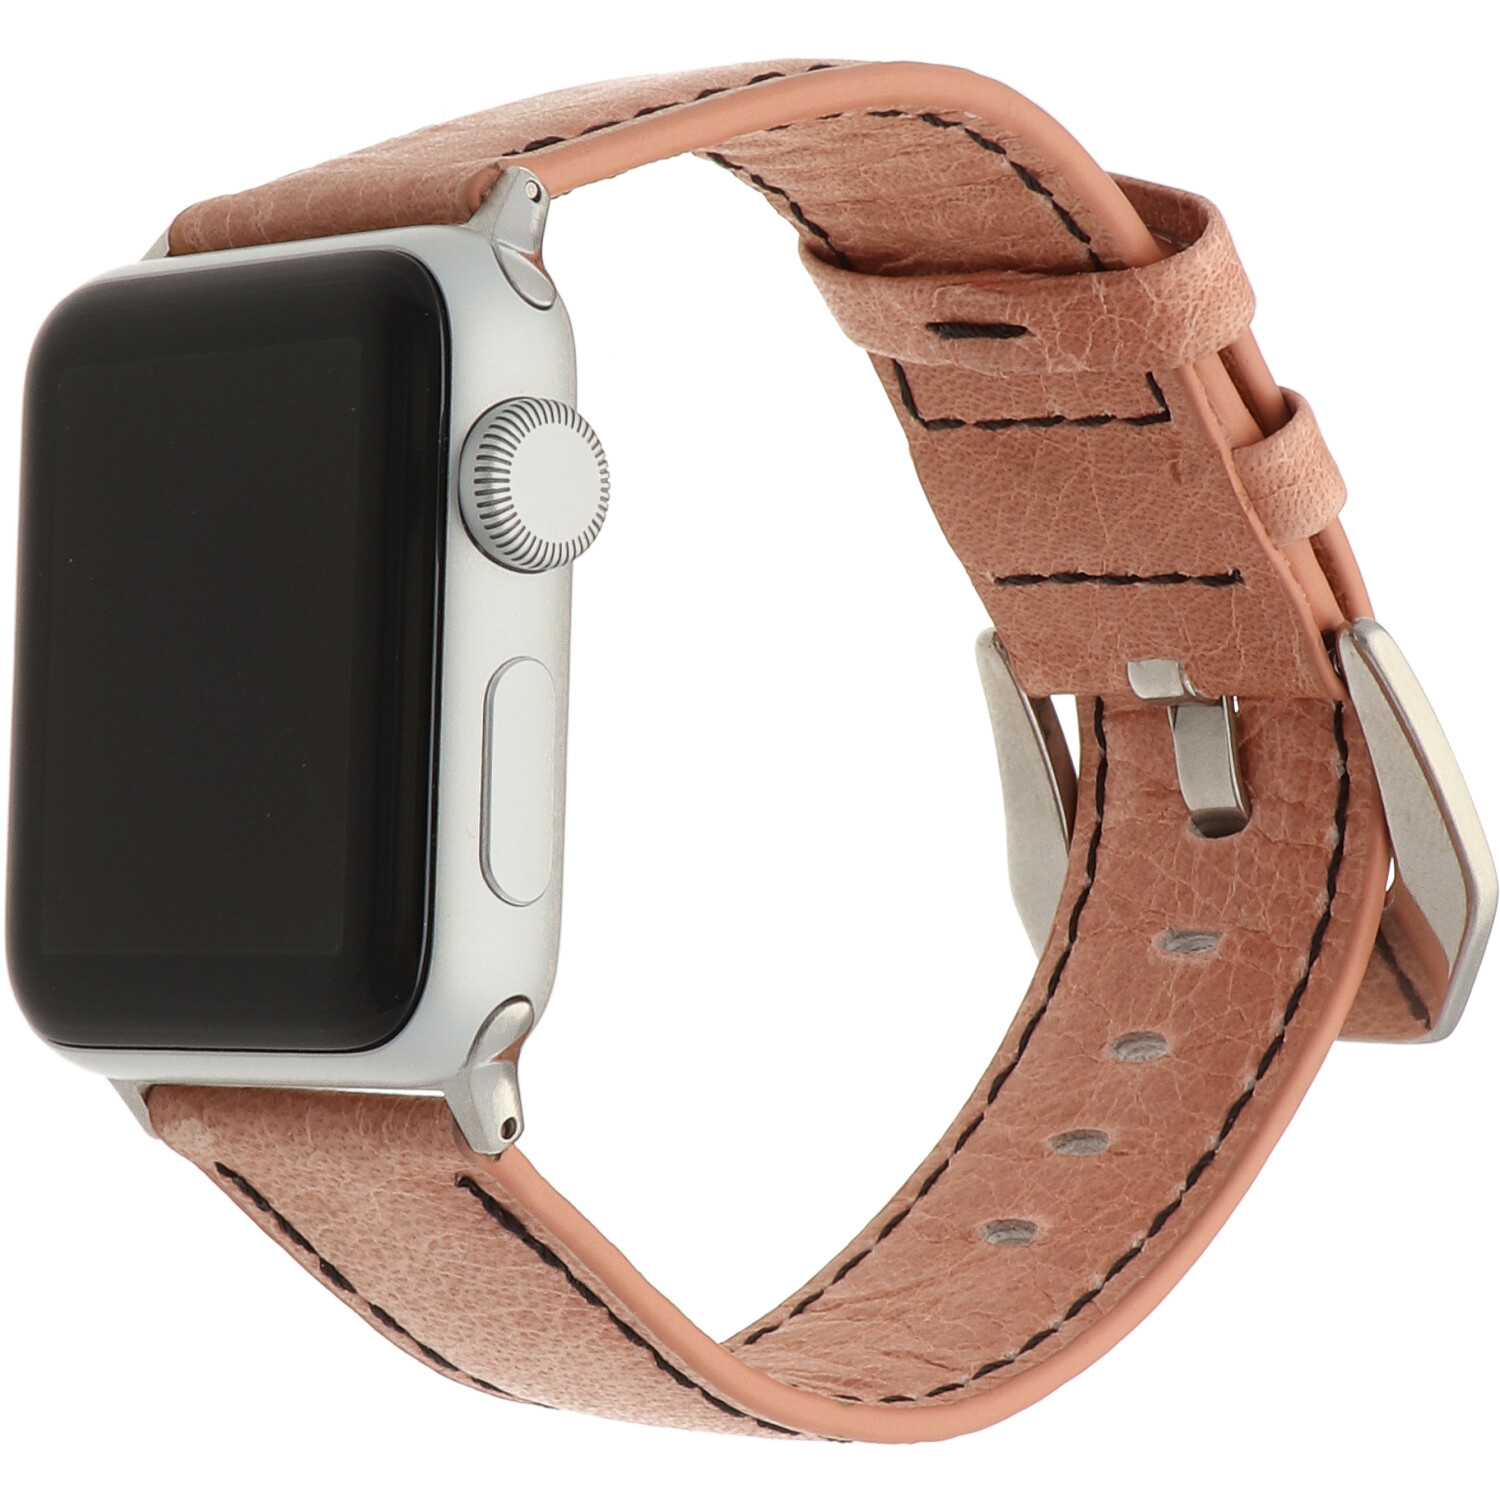 Apple Watch Leather Retro Strap - Beige